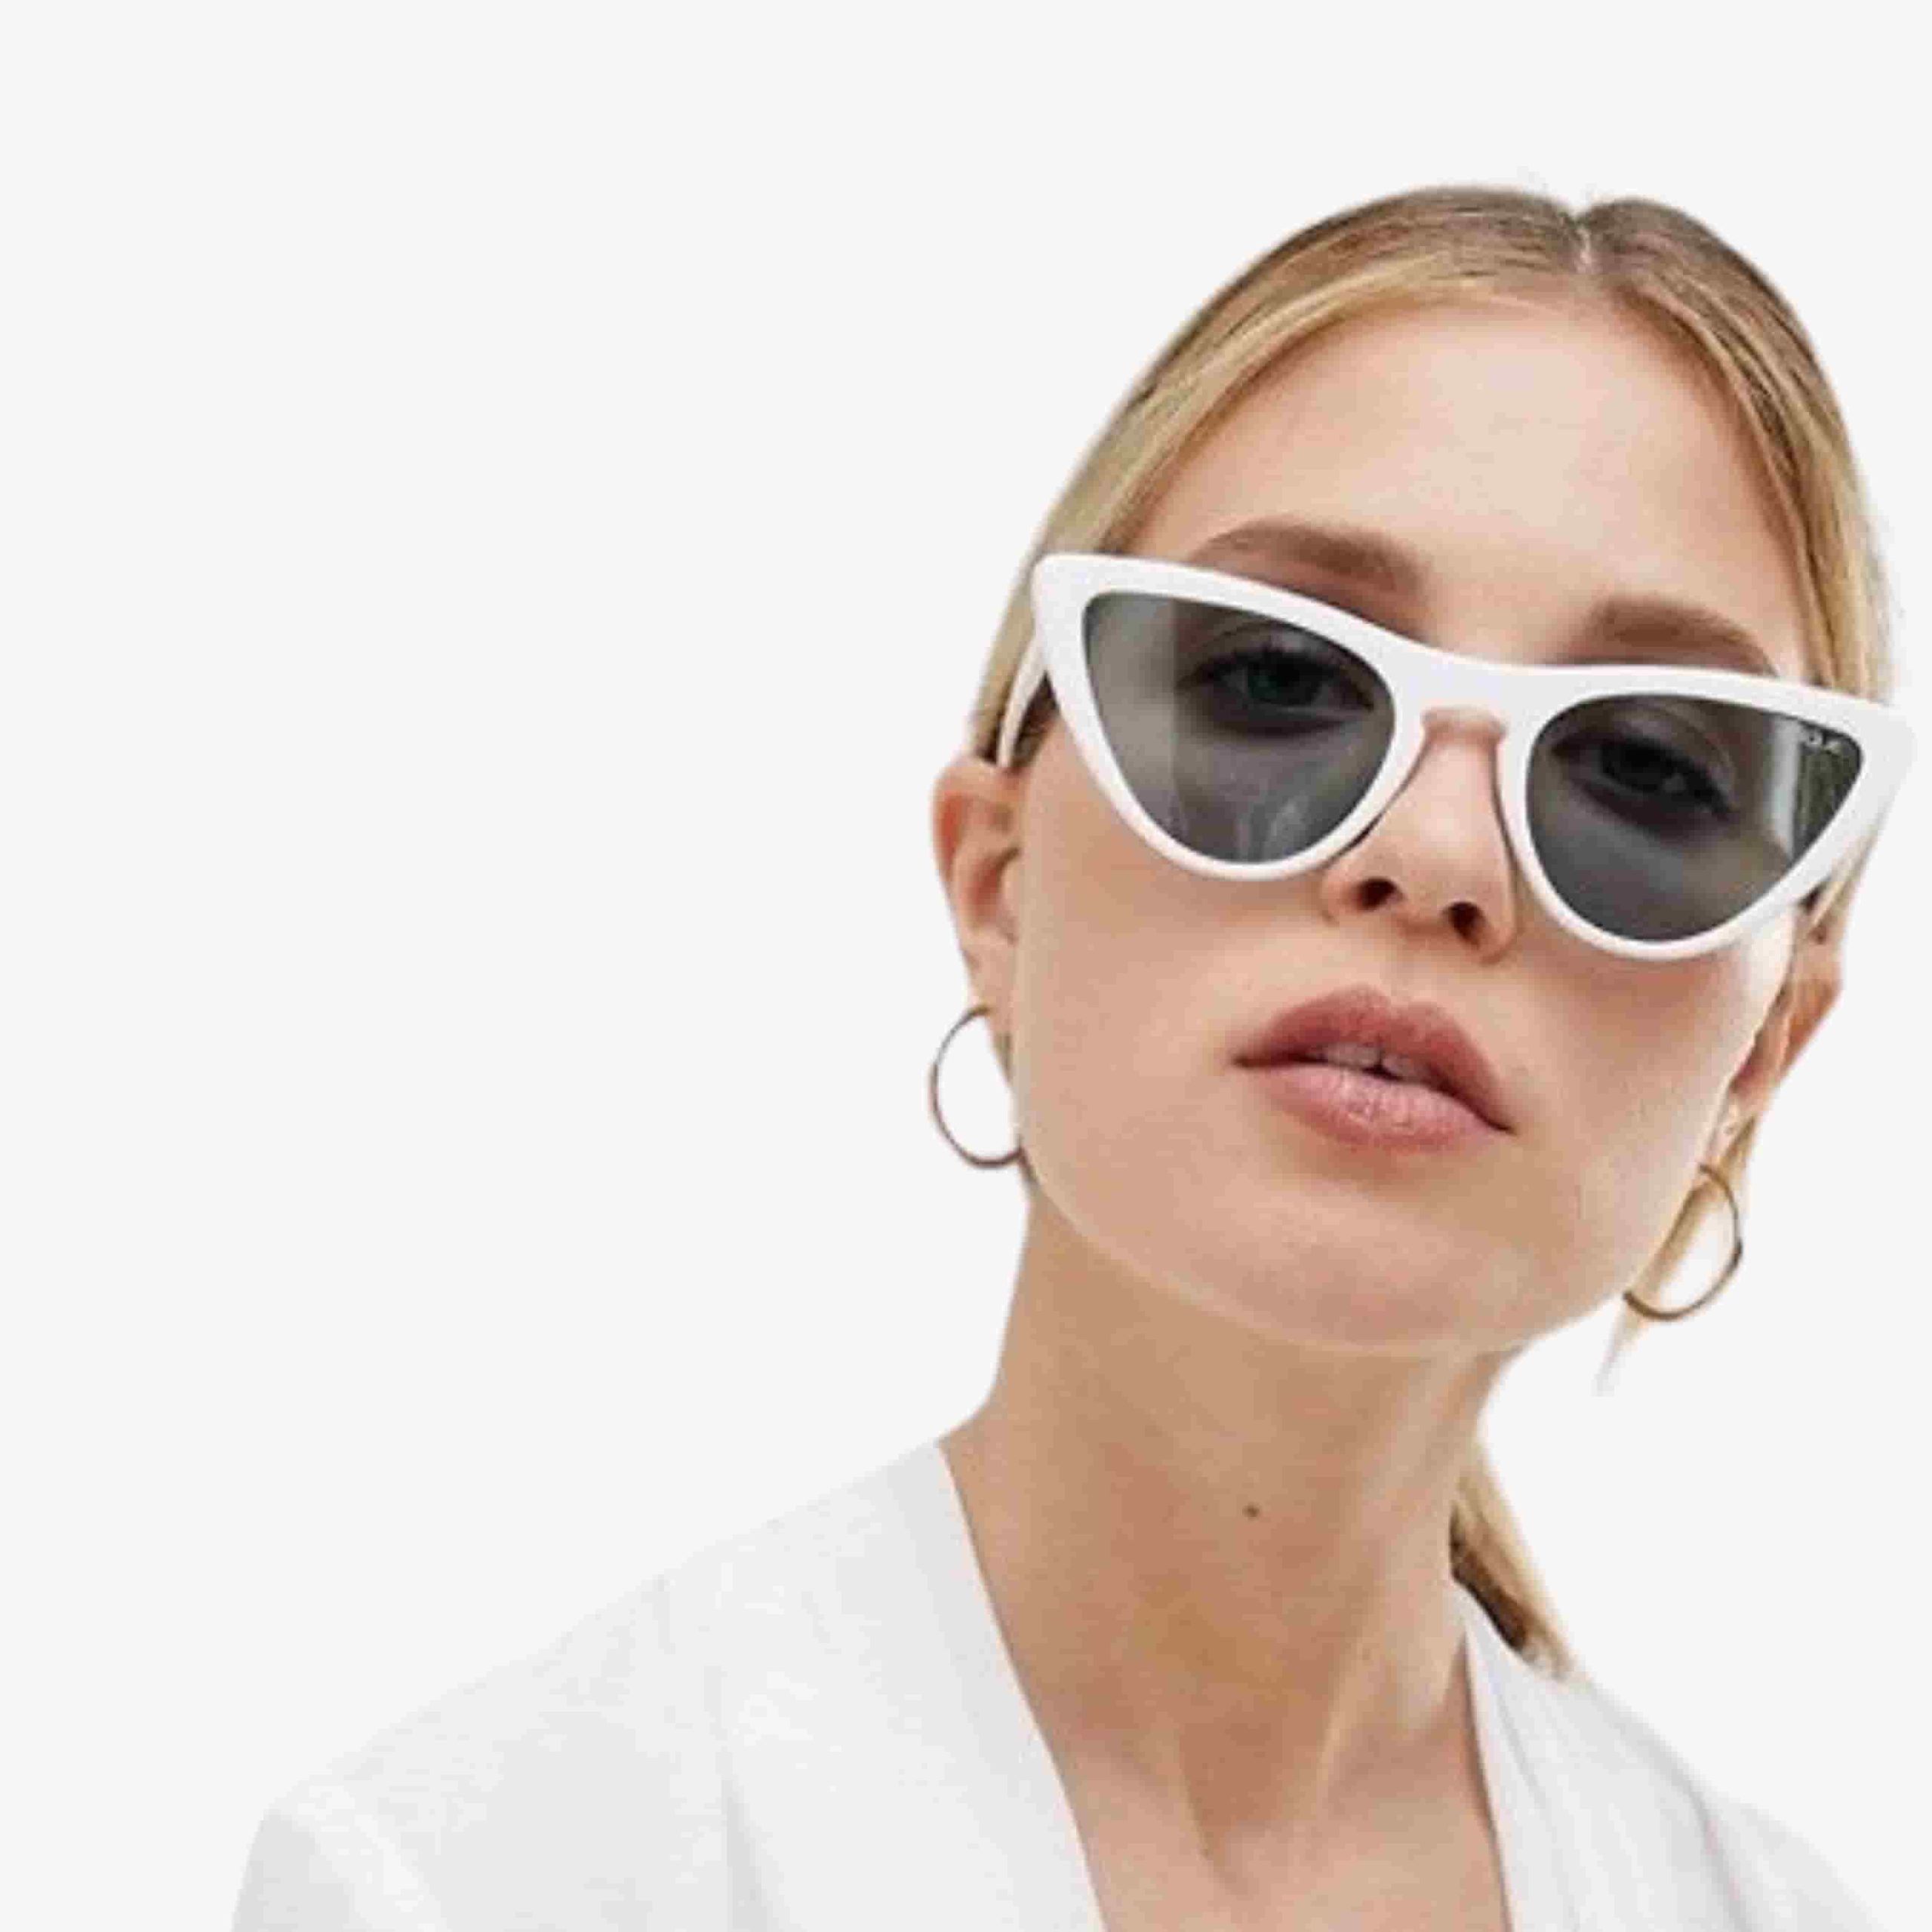 Buy Now Trending Branded Sunglasses 100% Authentic Mittal Optics